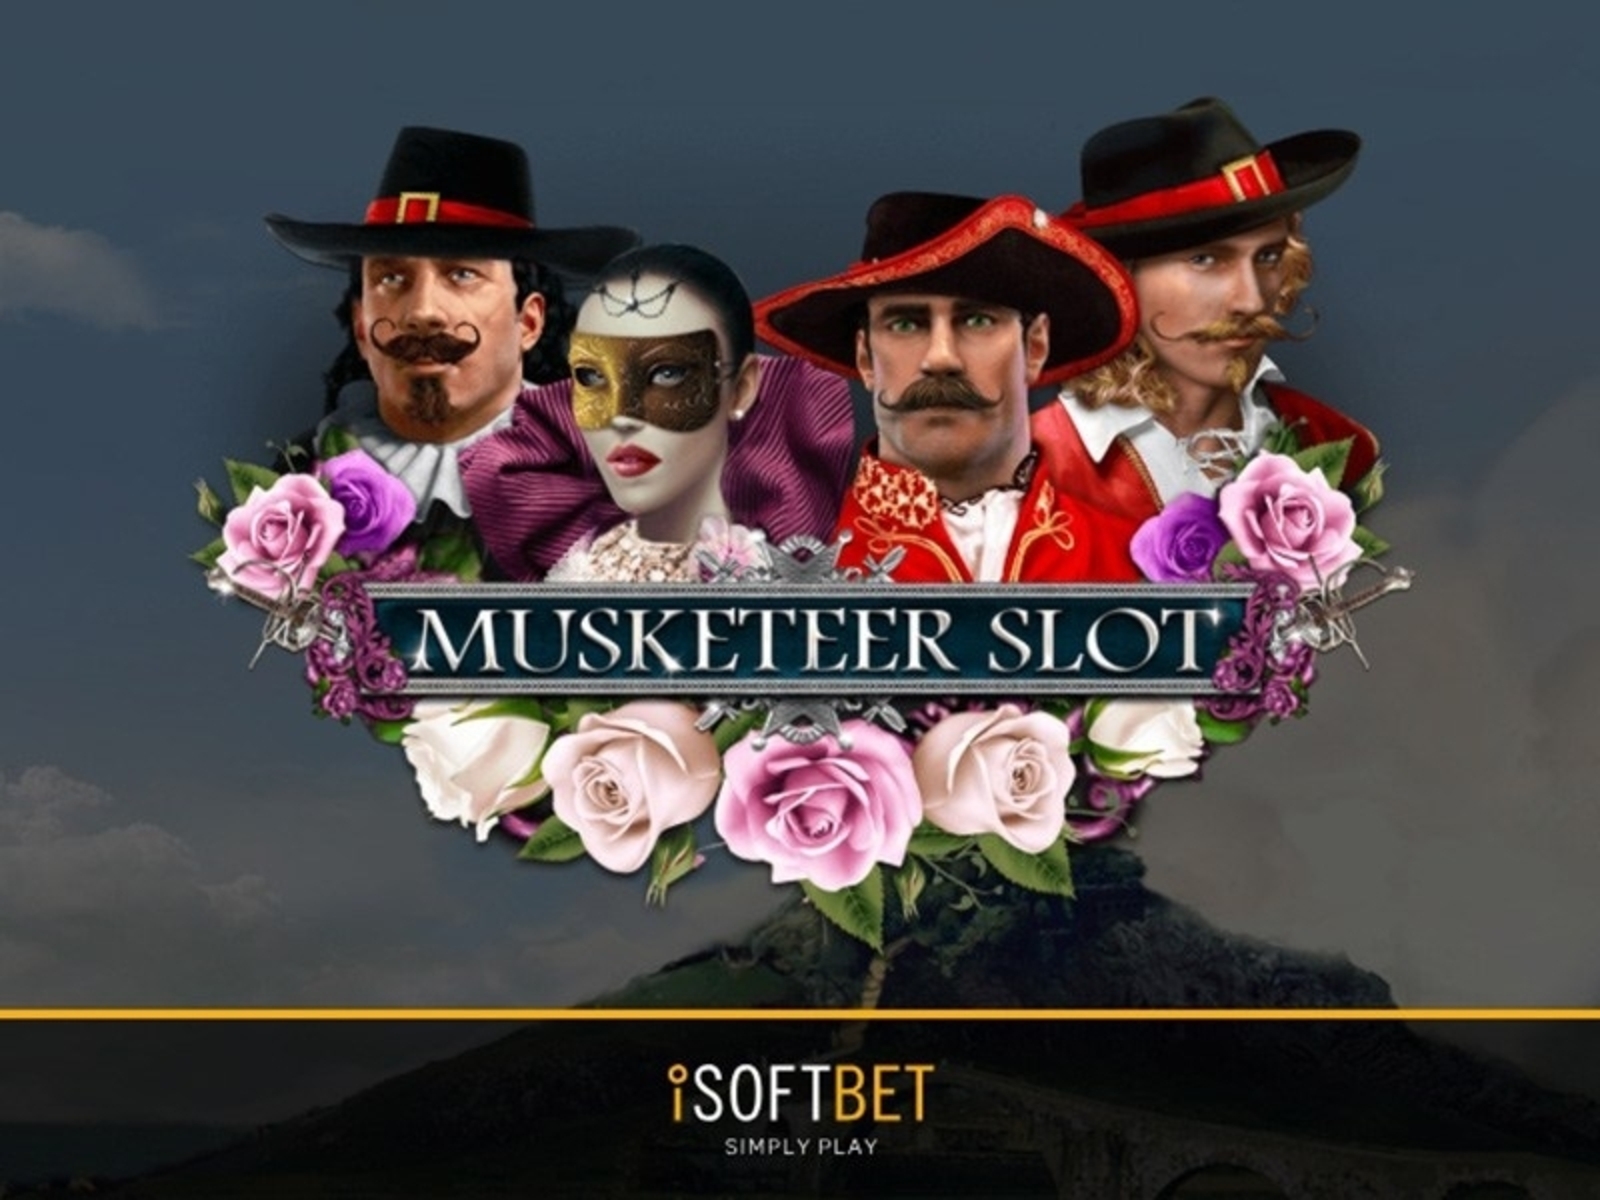 Musketeer Slot demo